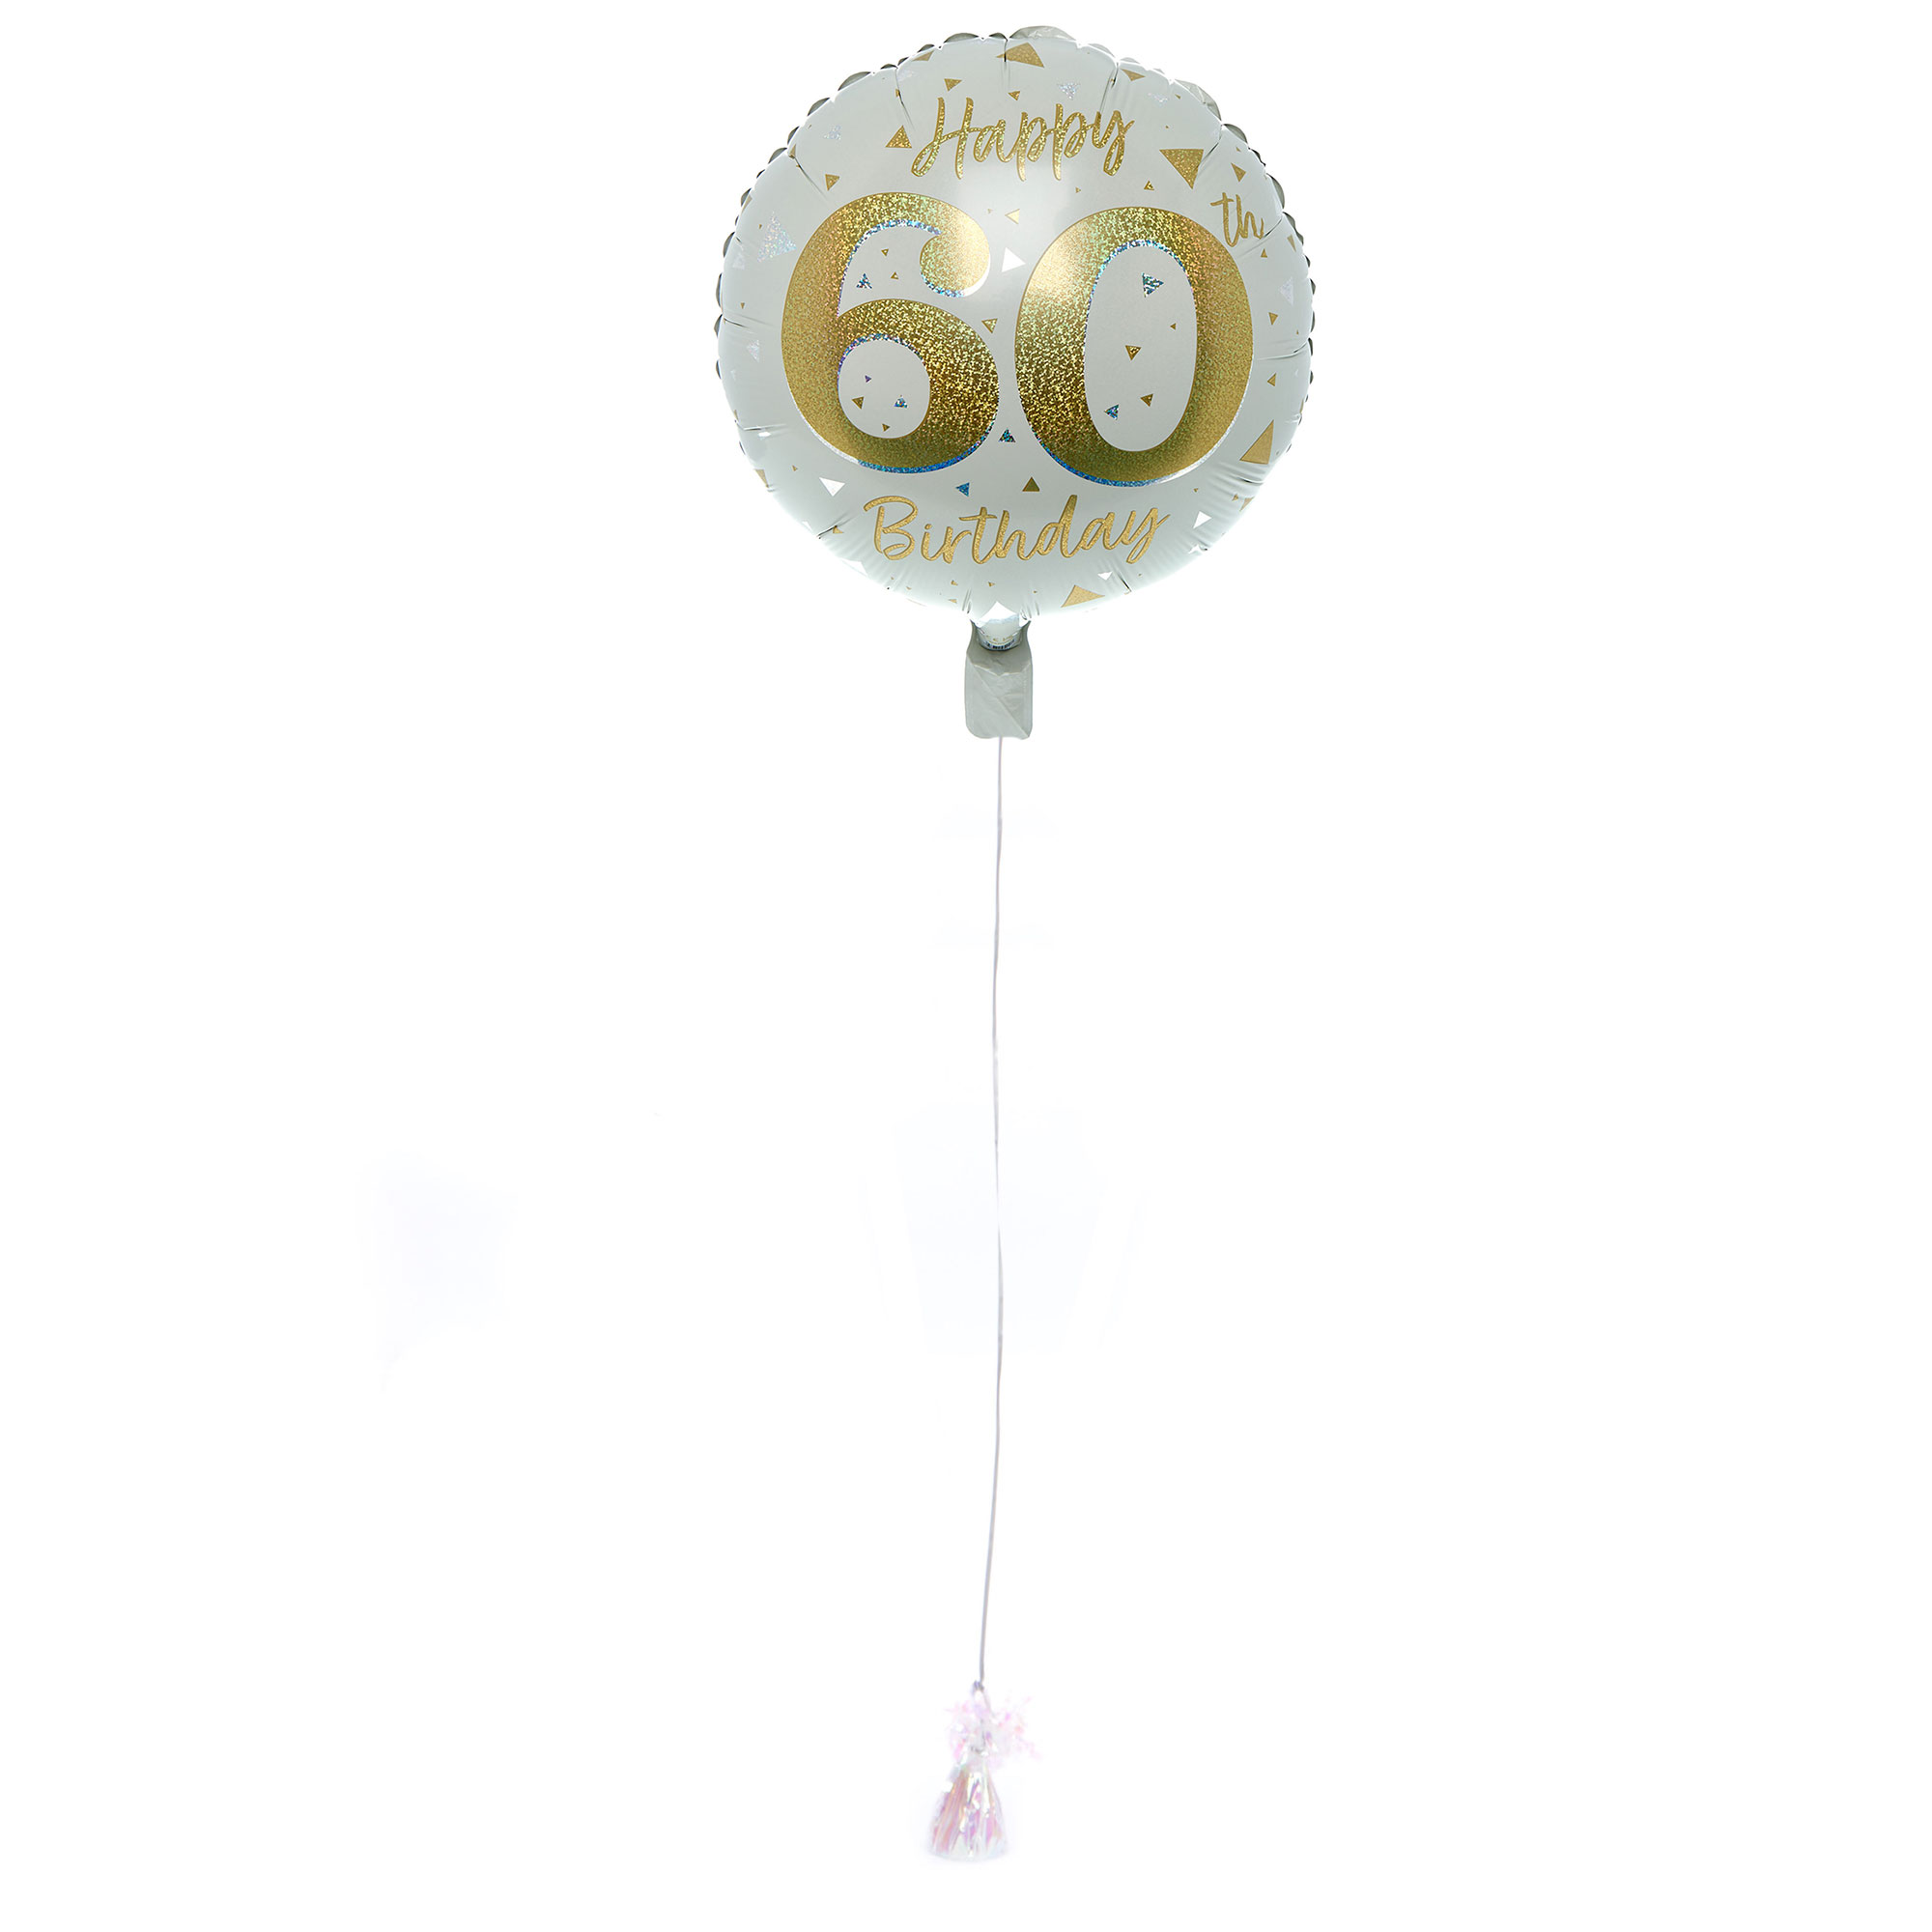 Happy 60th Birthday Balloon & Lindt Chocolate Box - FREE GIFT CARD!